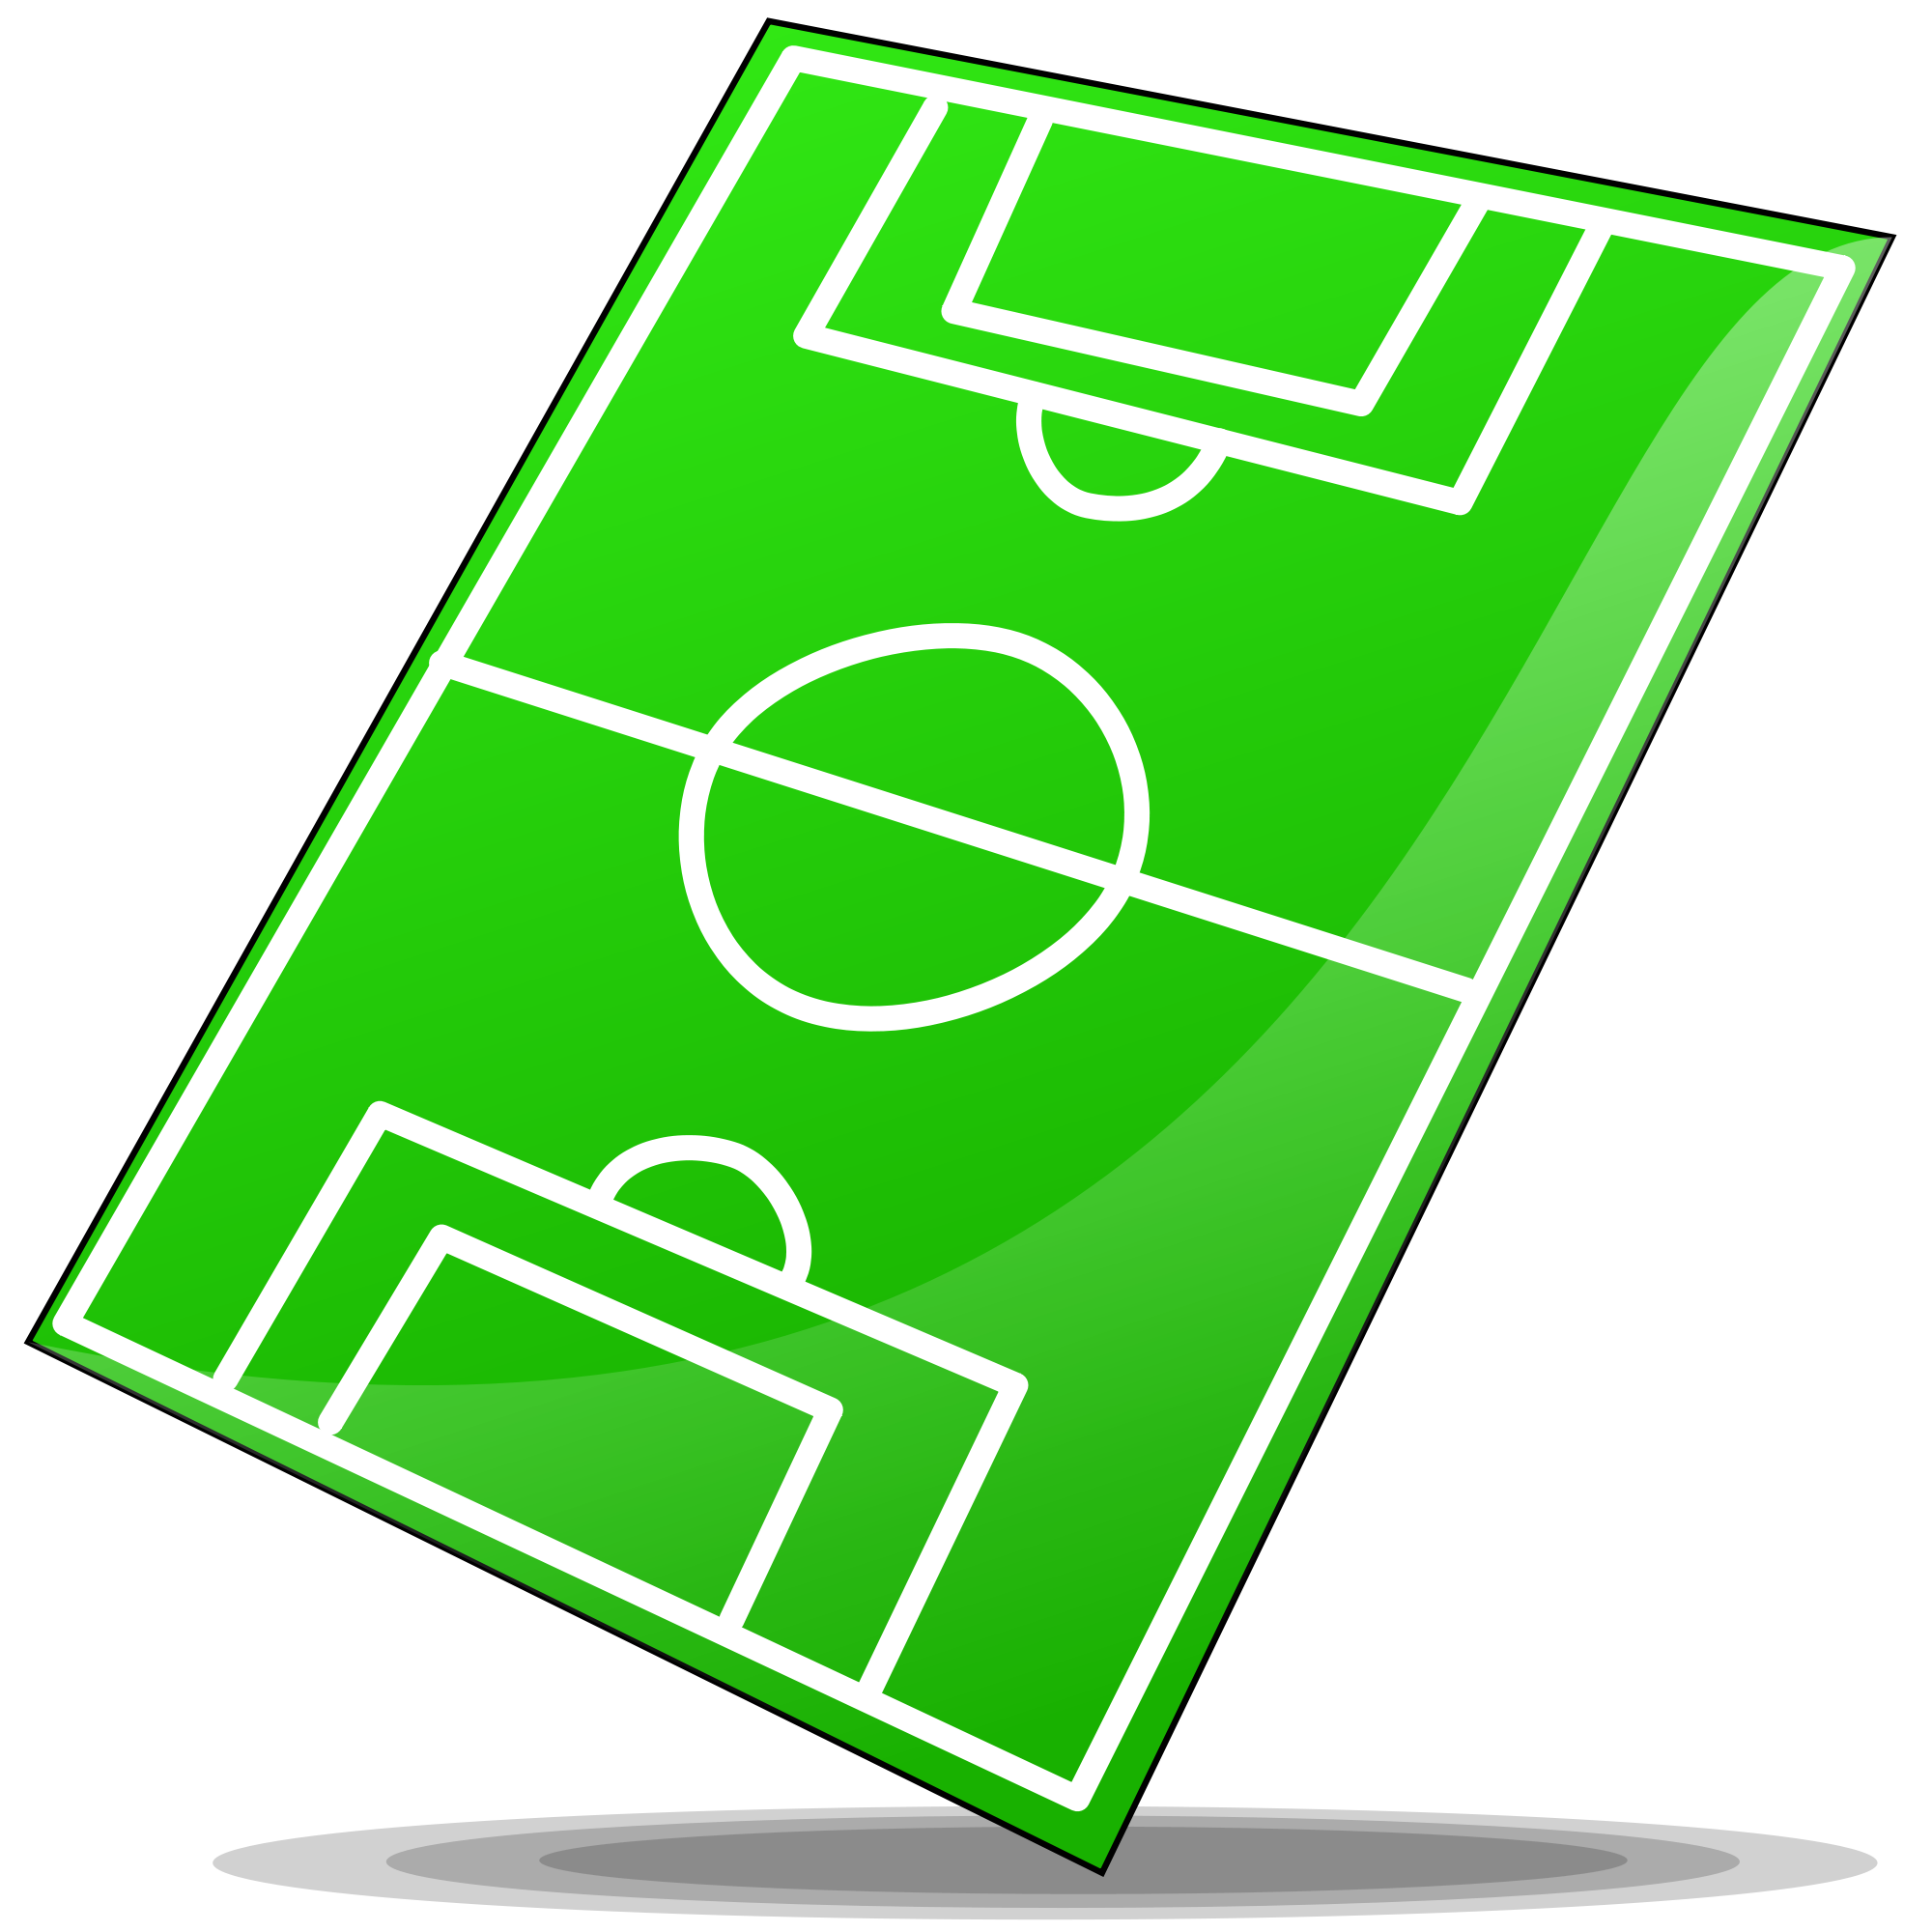 File:Soccer field icon.svg